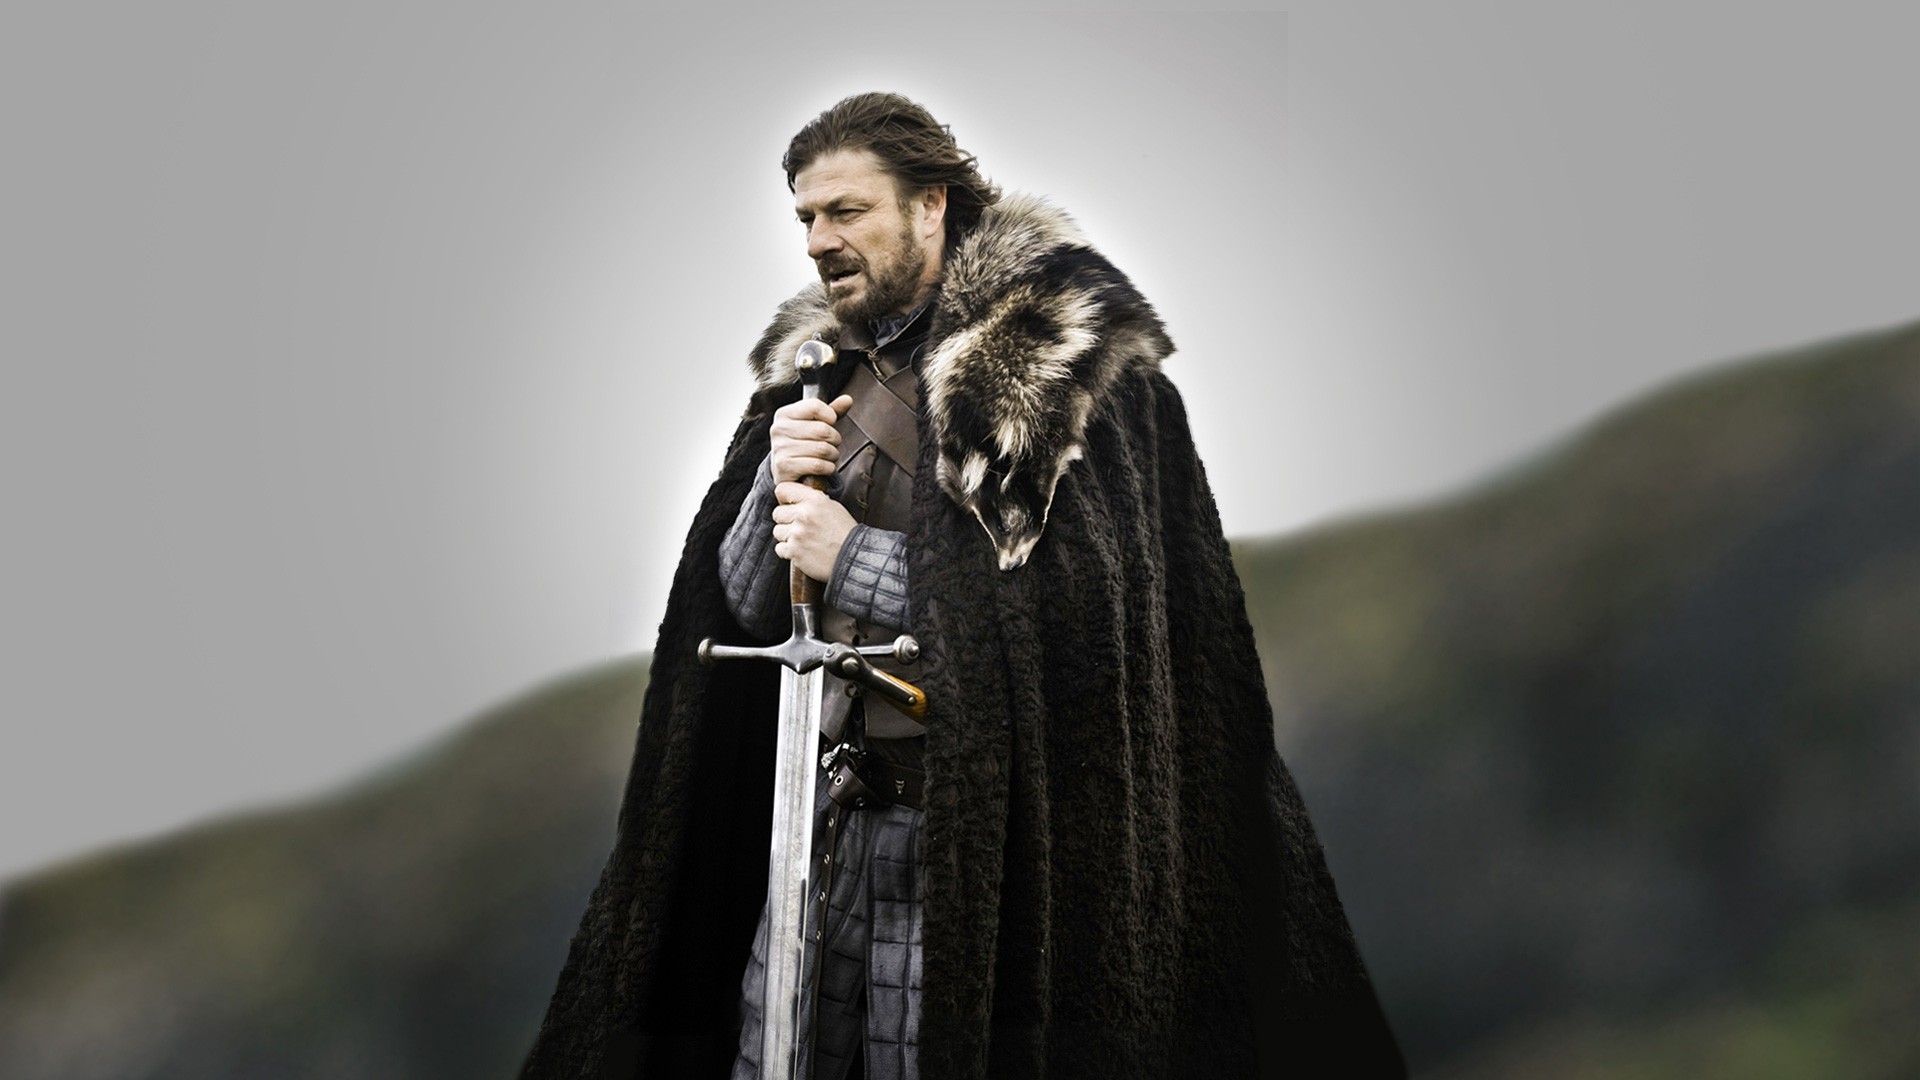 People 1920x1080 Game of Thrones Ned Stark Sean Bean TV series sword men